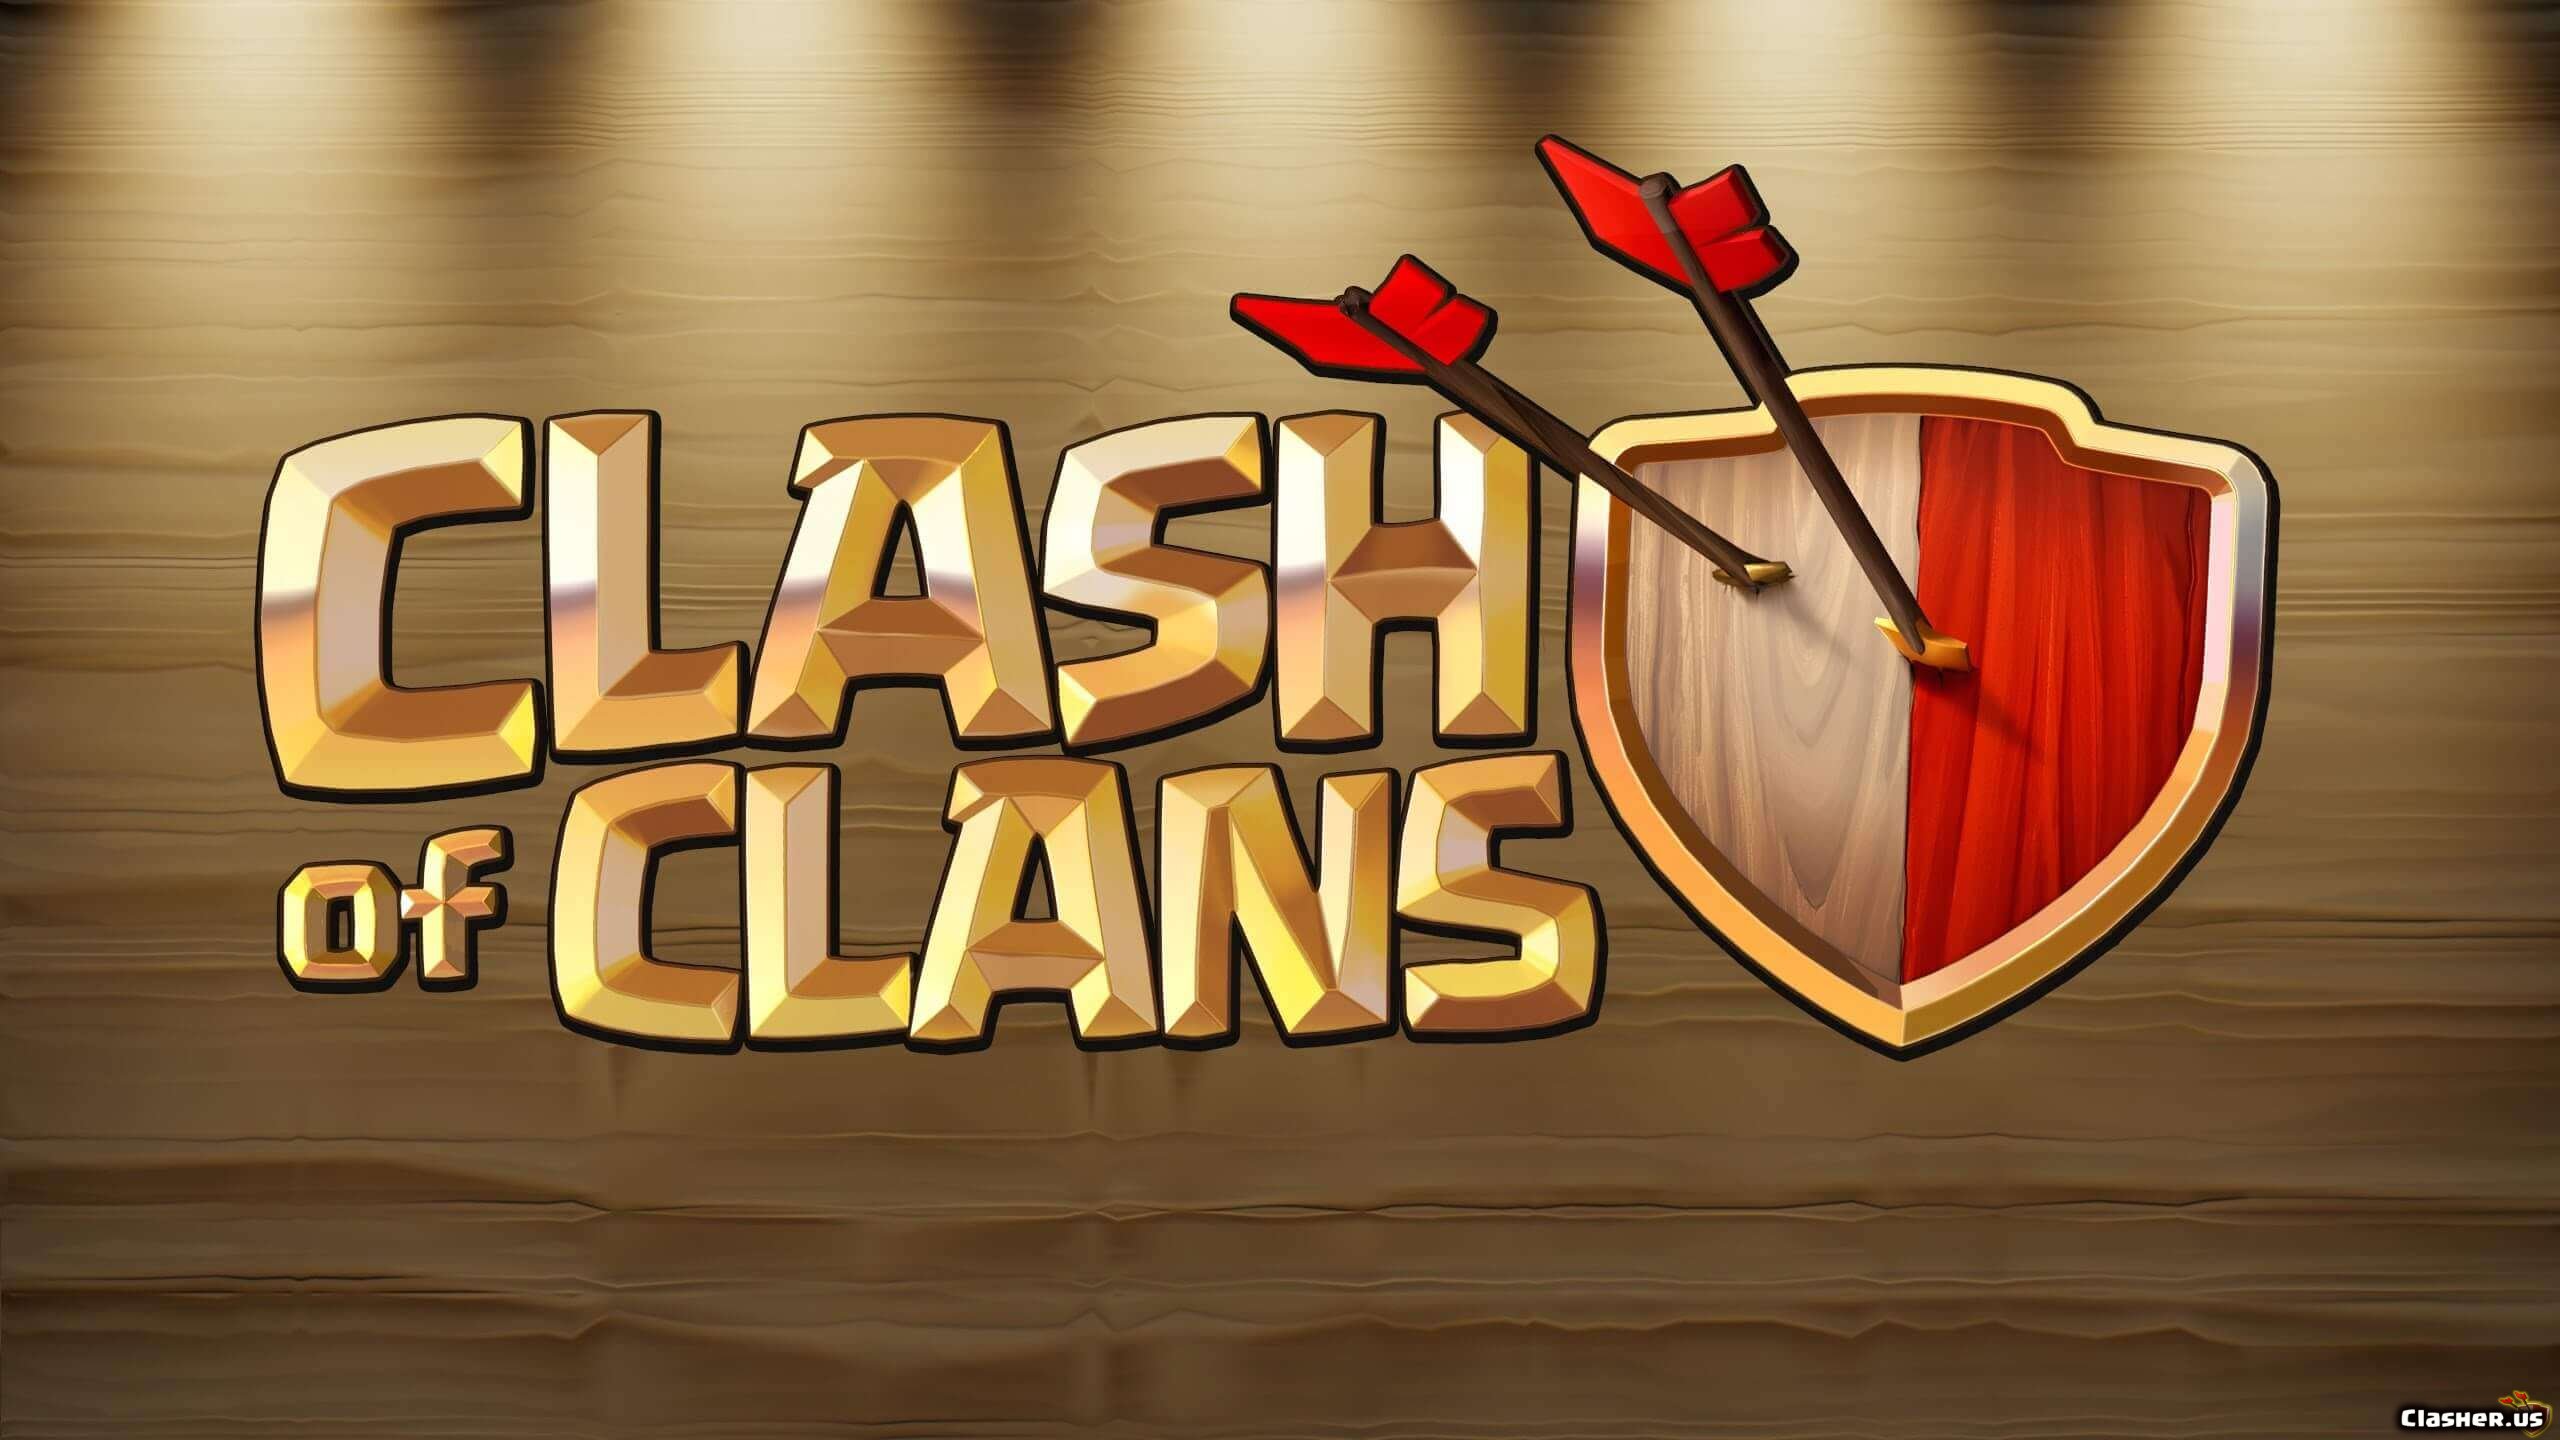 Clash of clans 16. Клеш оф кланс. Clash of Clans логотип. Clash of Clans заставка. Clash of Clans надпись.